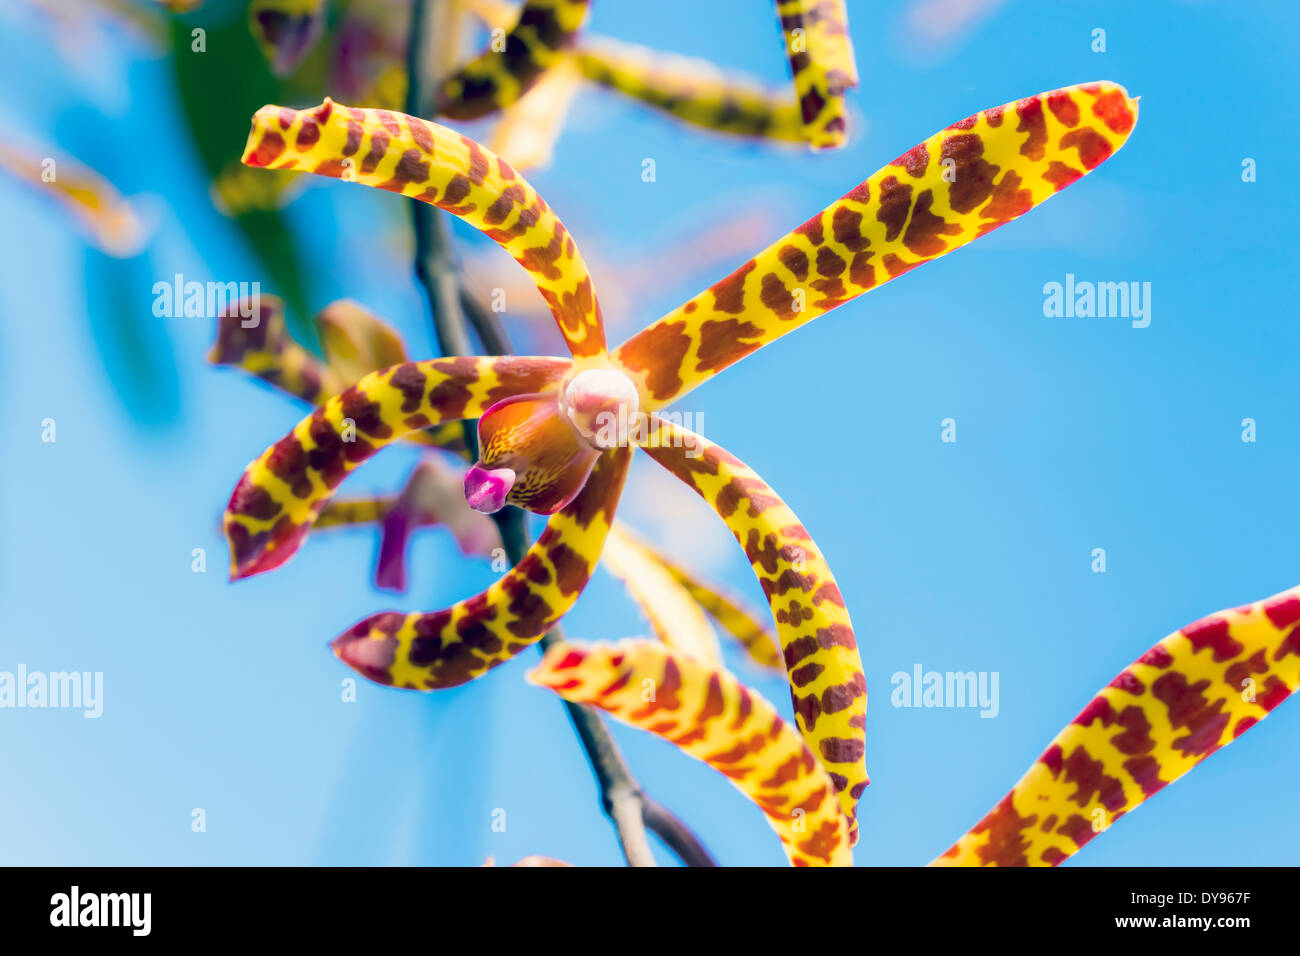 Seychelles, Mahe, Arachnis flos-aeris, close-up Stock Photo